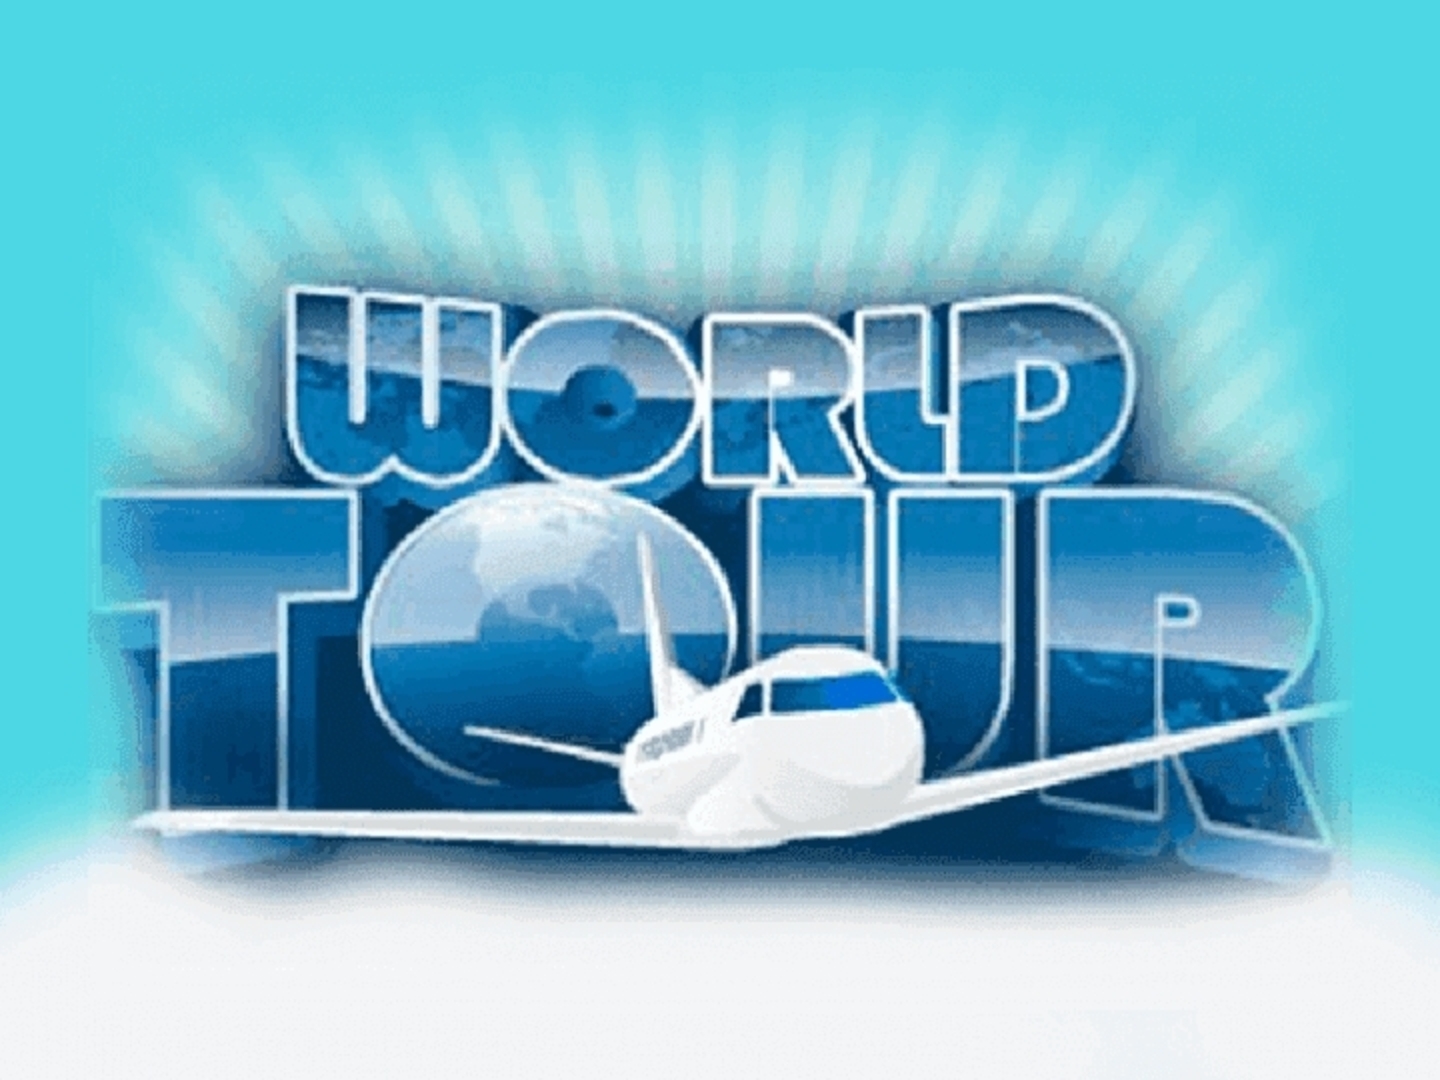 World Tour demo